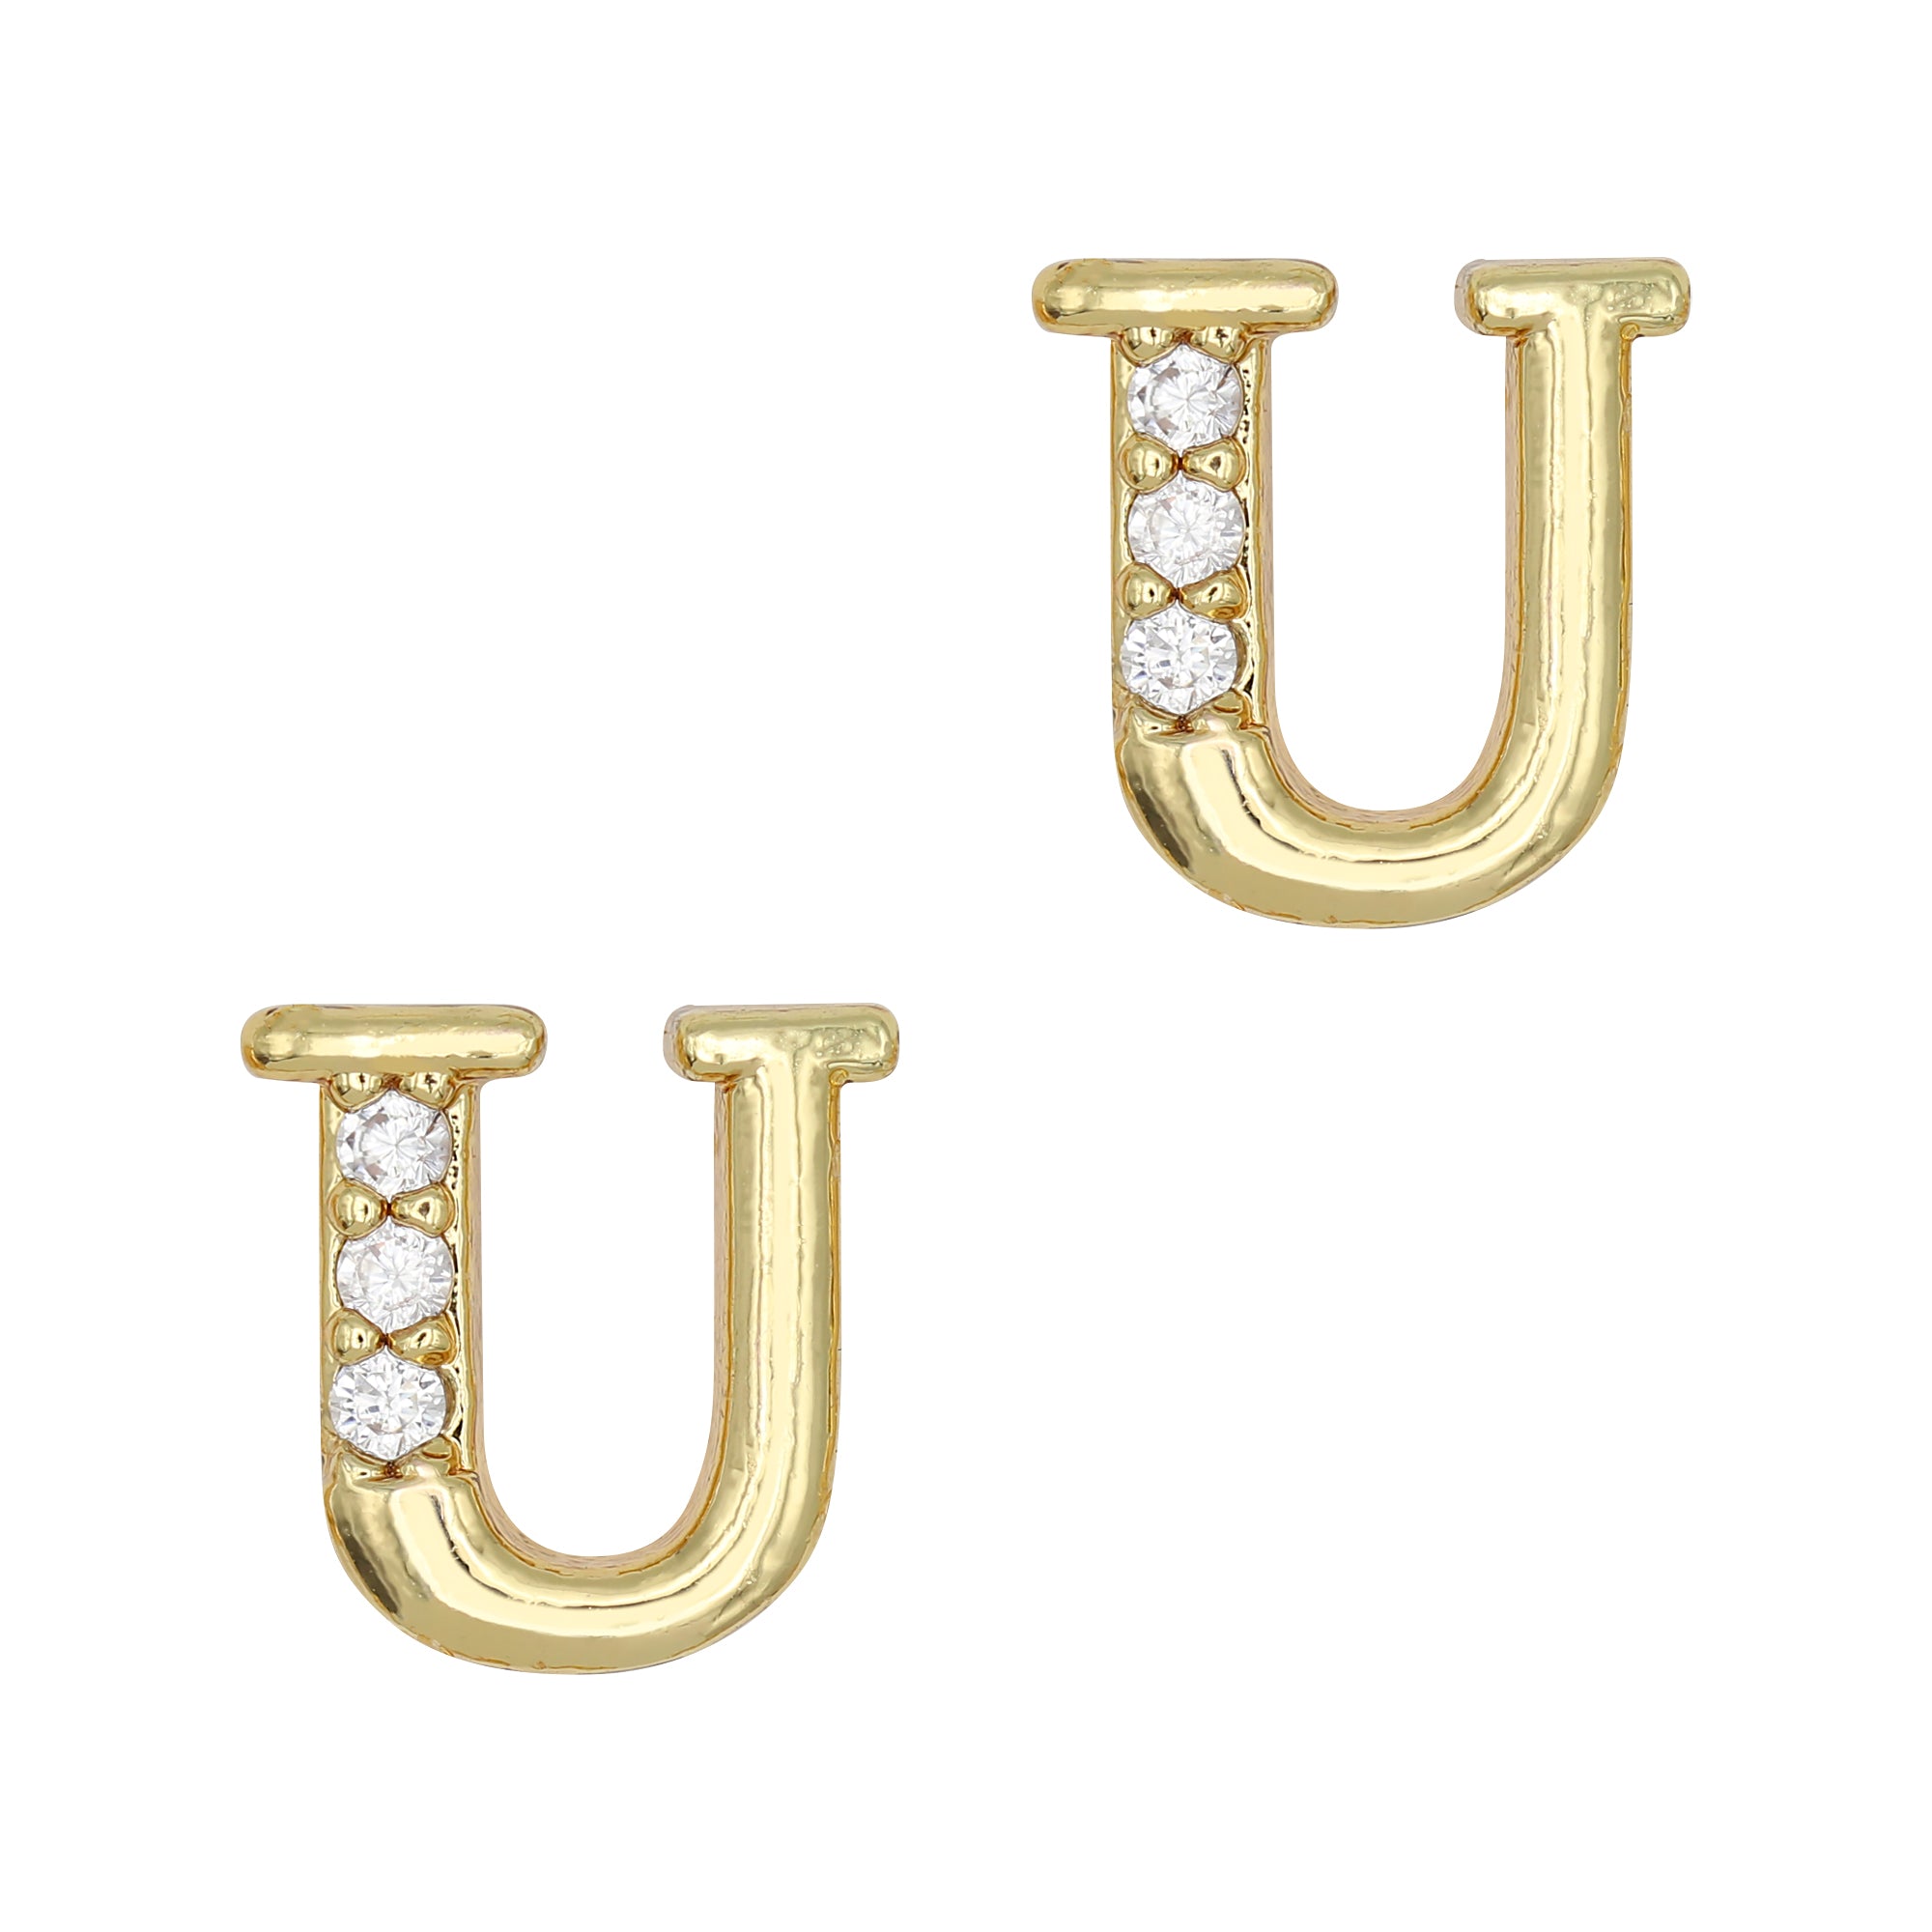 Alphabet U / Zircon Charm / Gold